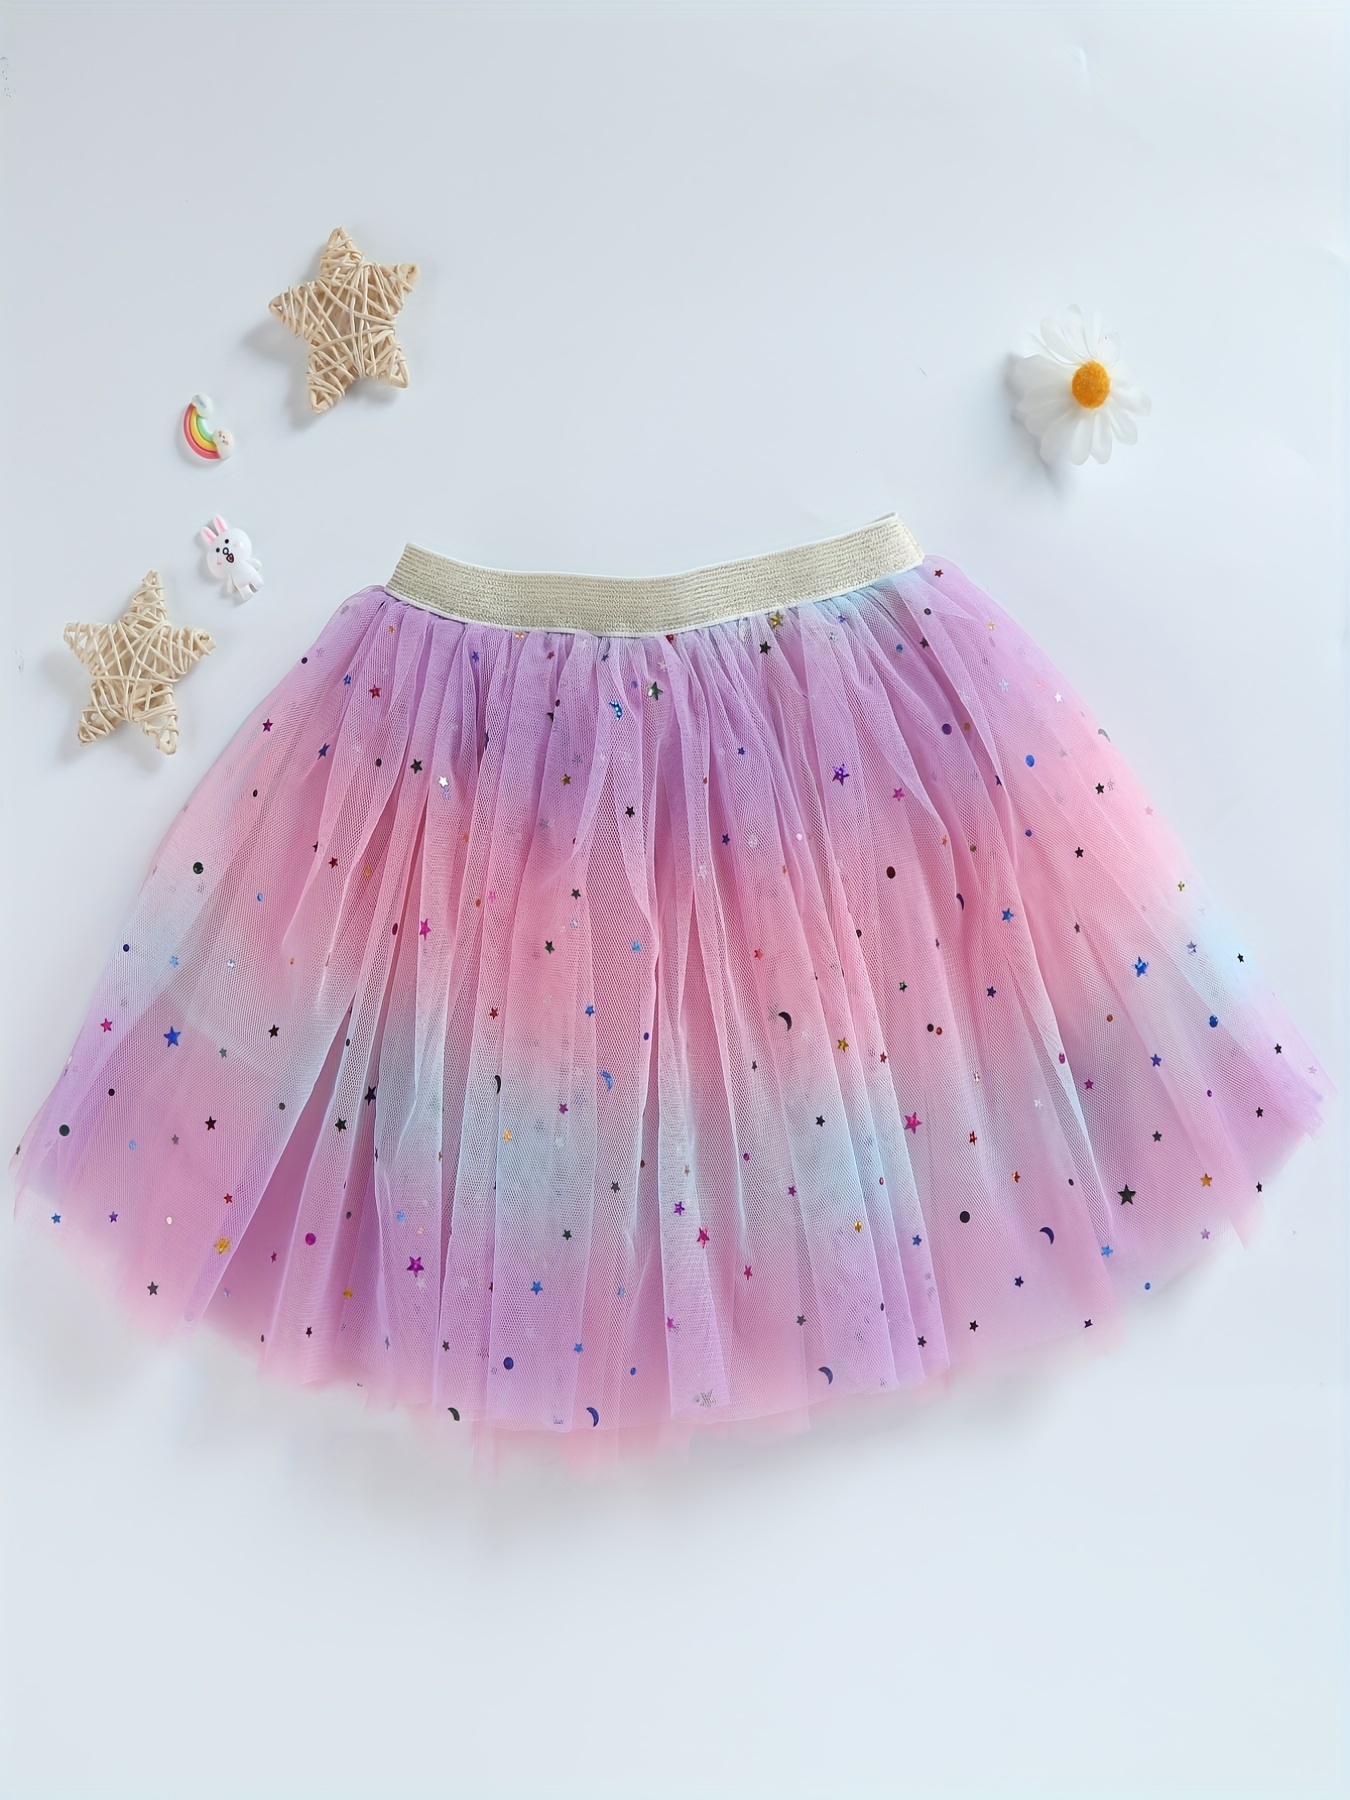 Rainbow Knee Length Skirt Layered Tulle Skirt Girls Colorful